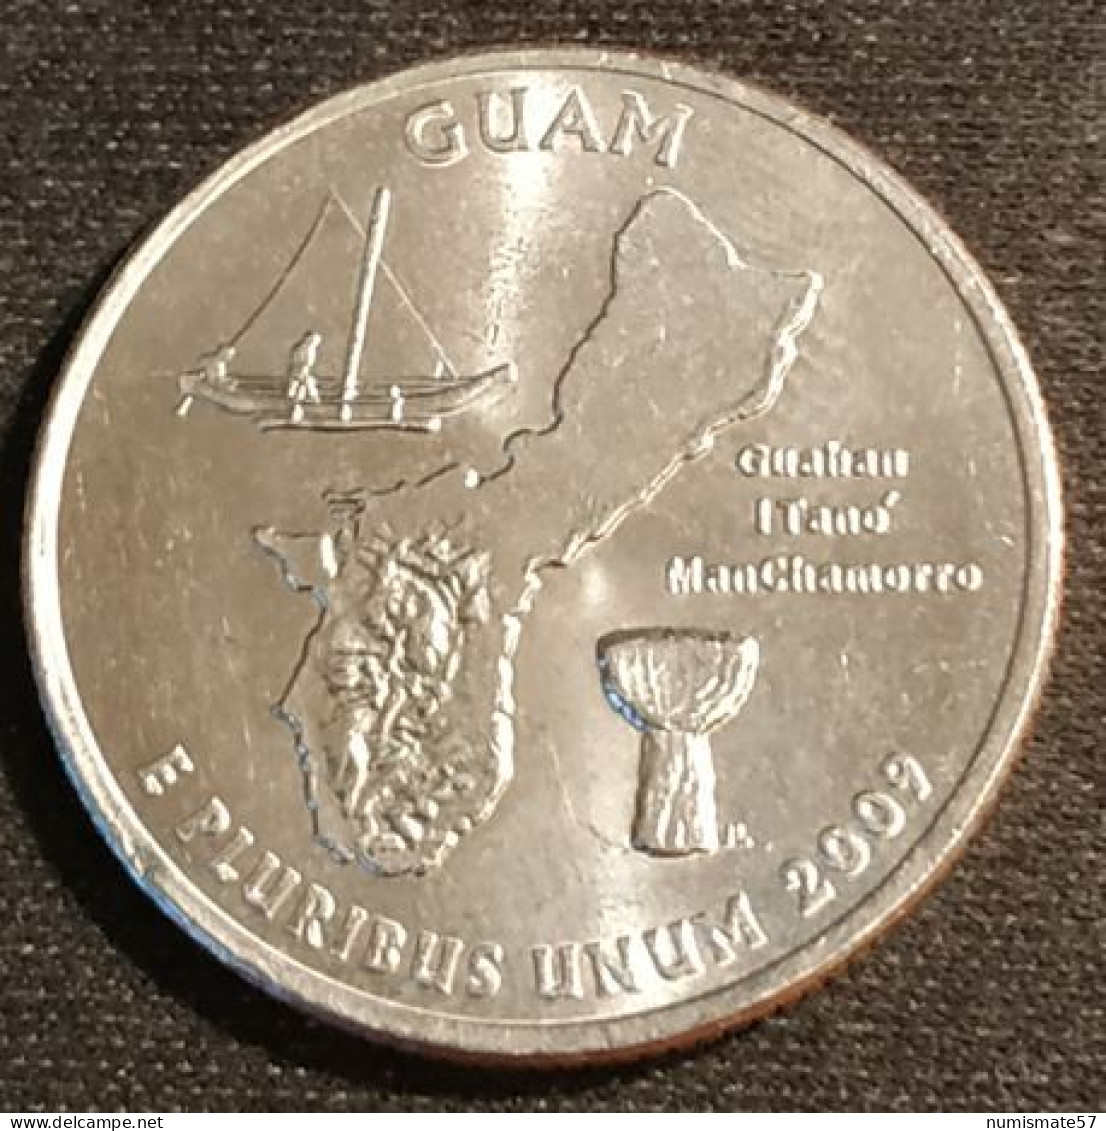 ETATS UNIS - USA - ¼ - 1/4 DOLLAR 2009 P - Guam - KM 447 - Quarter Dollar - 1999-2009: State Quarters